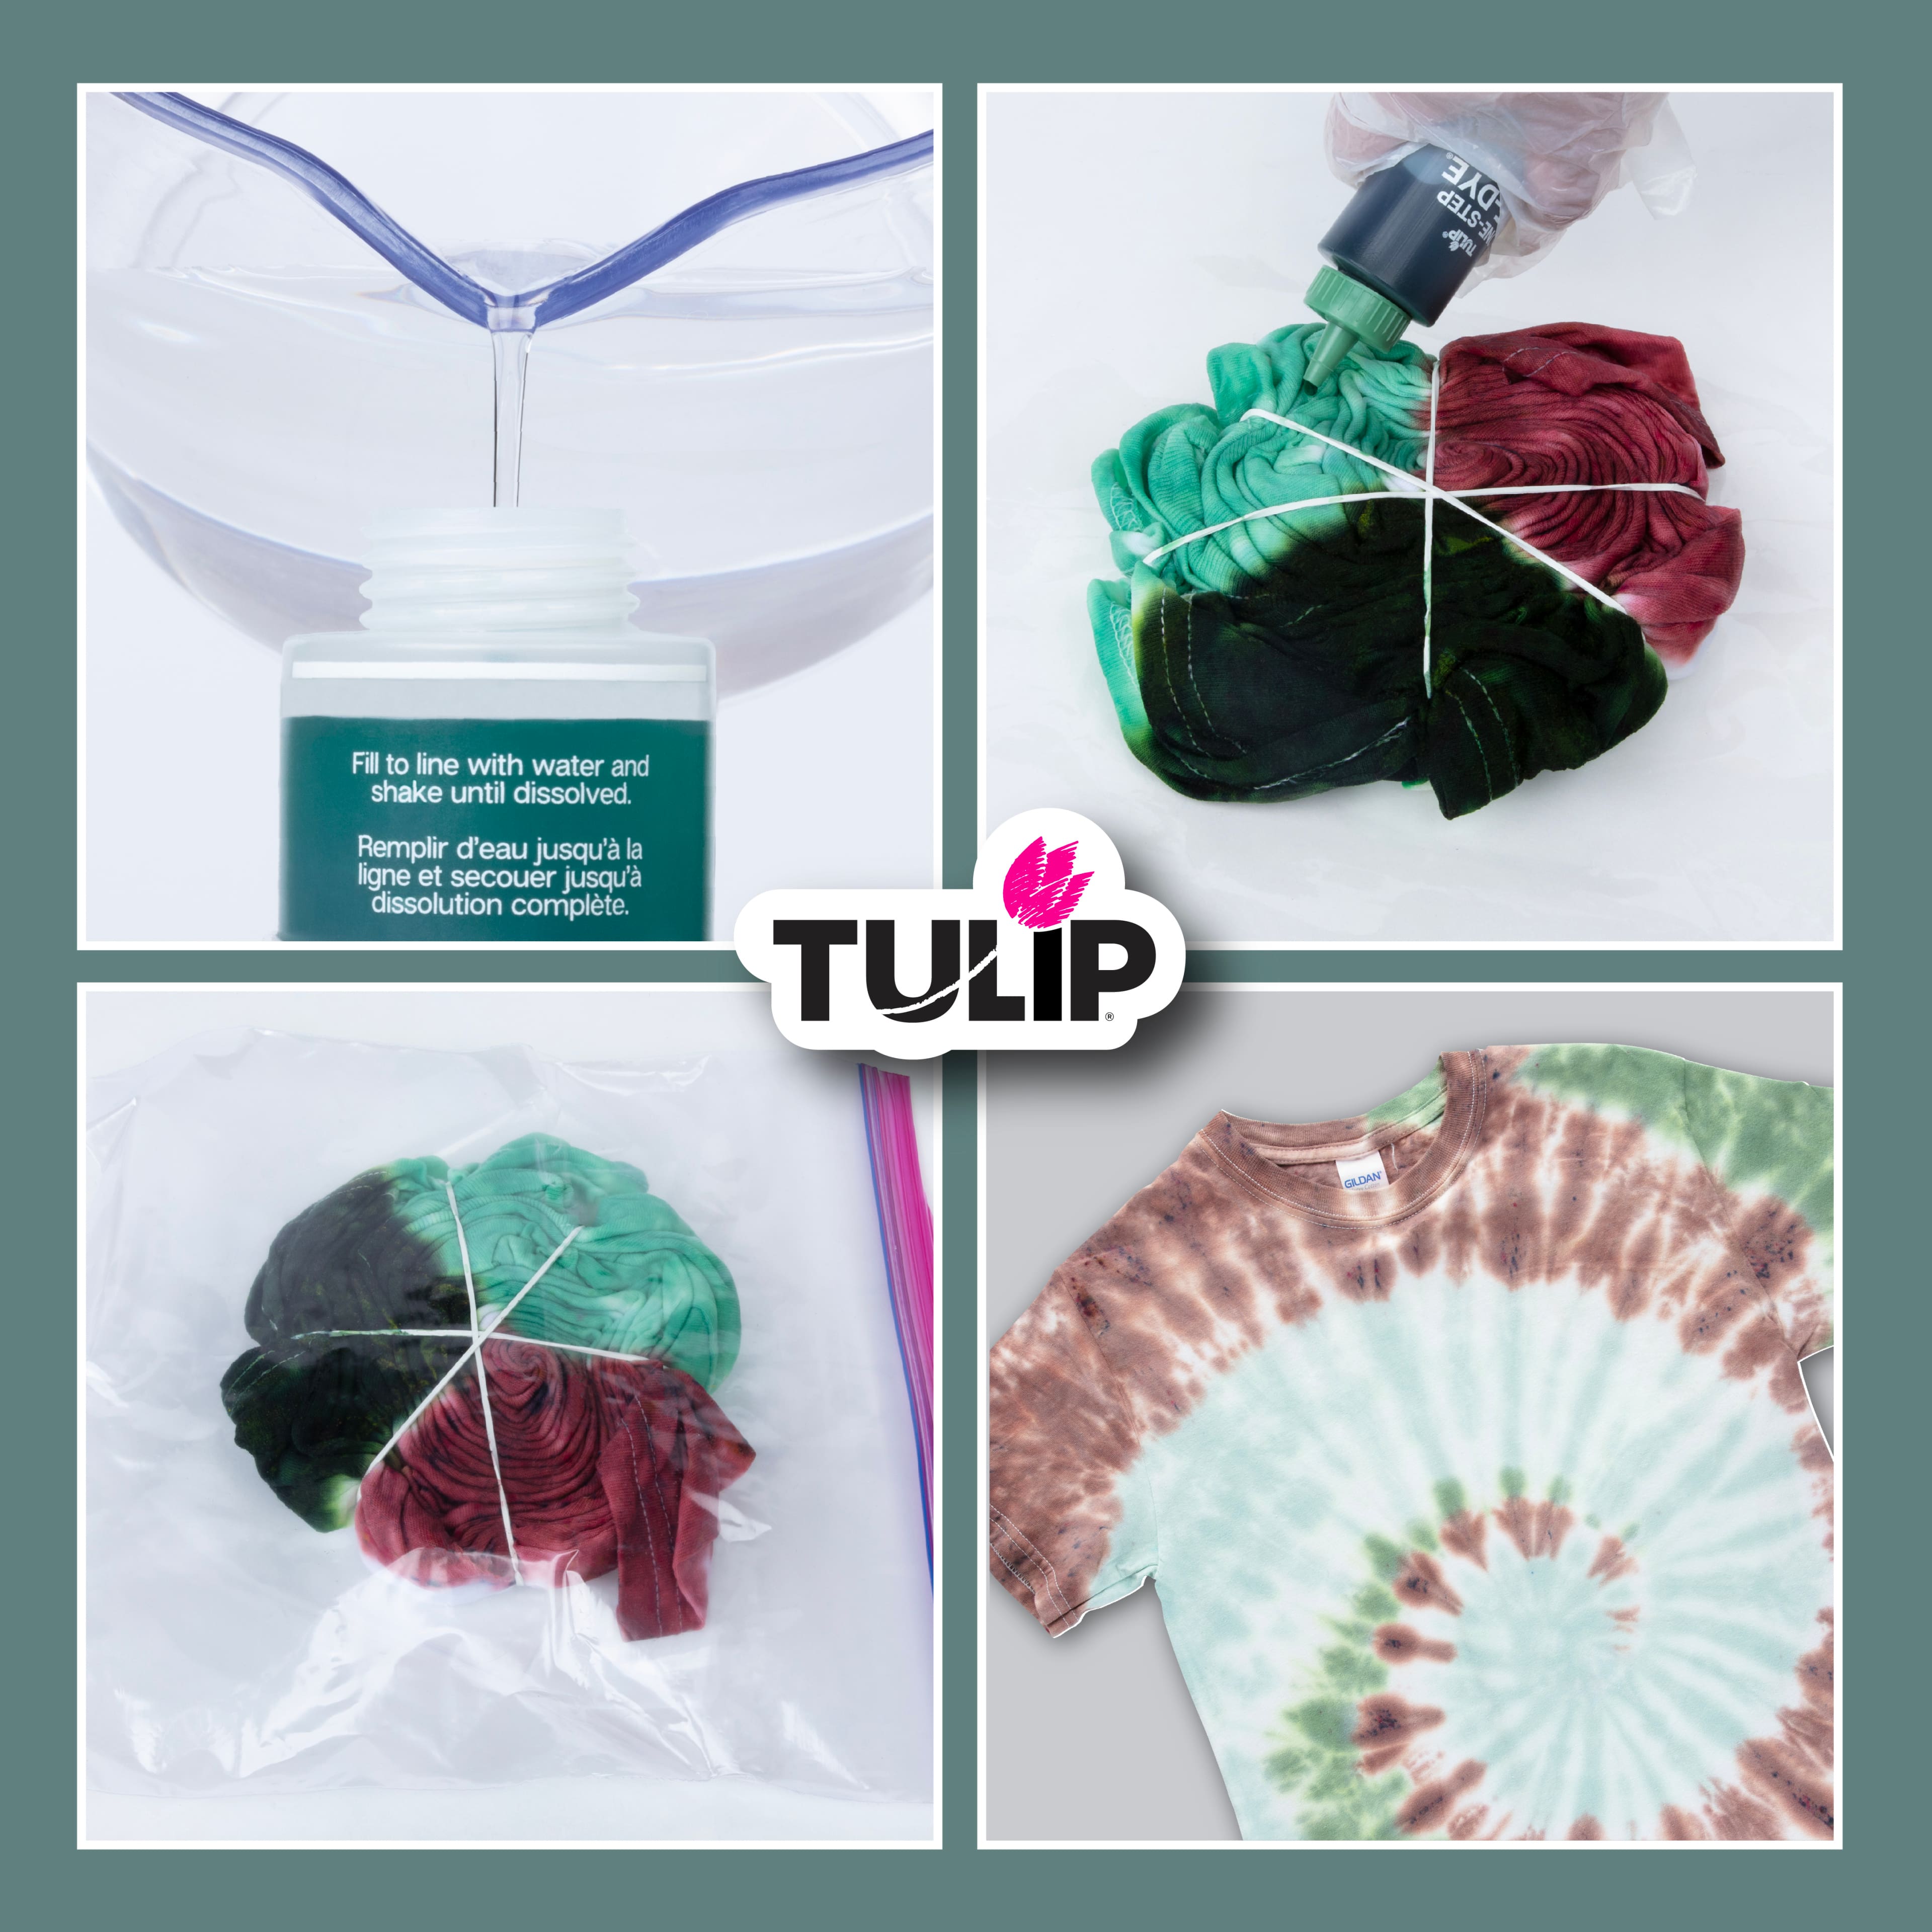 Tulip&#xAE; Camo One-Step Tie-Dye Kit&#xAE;